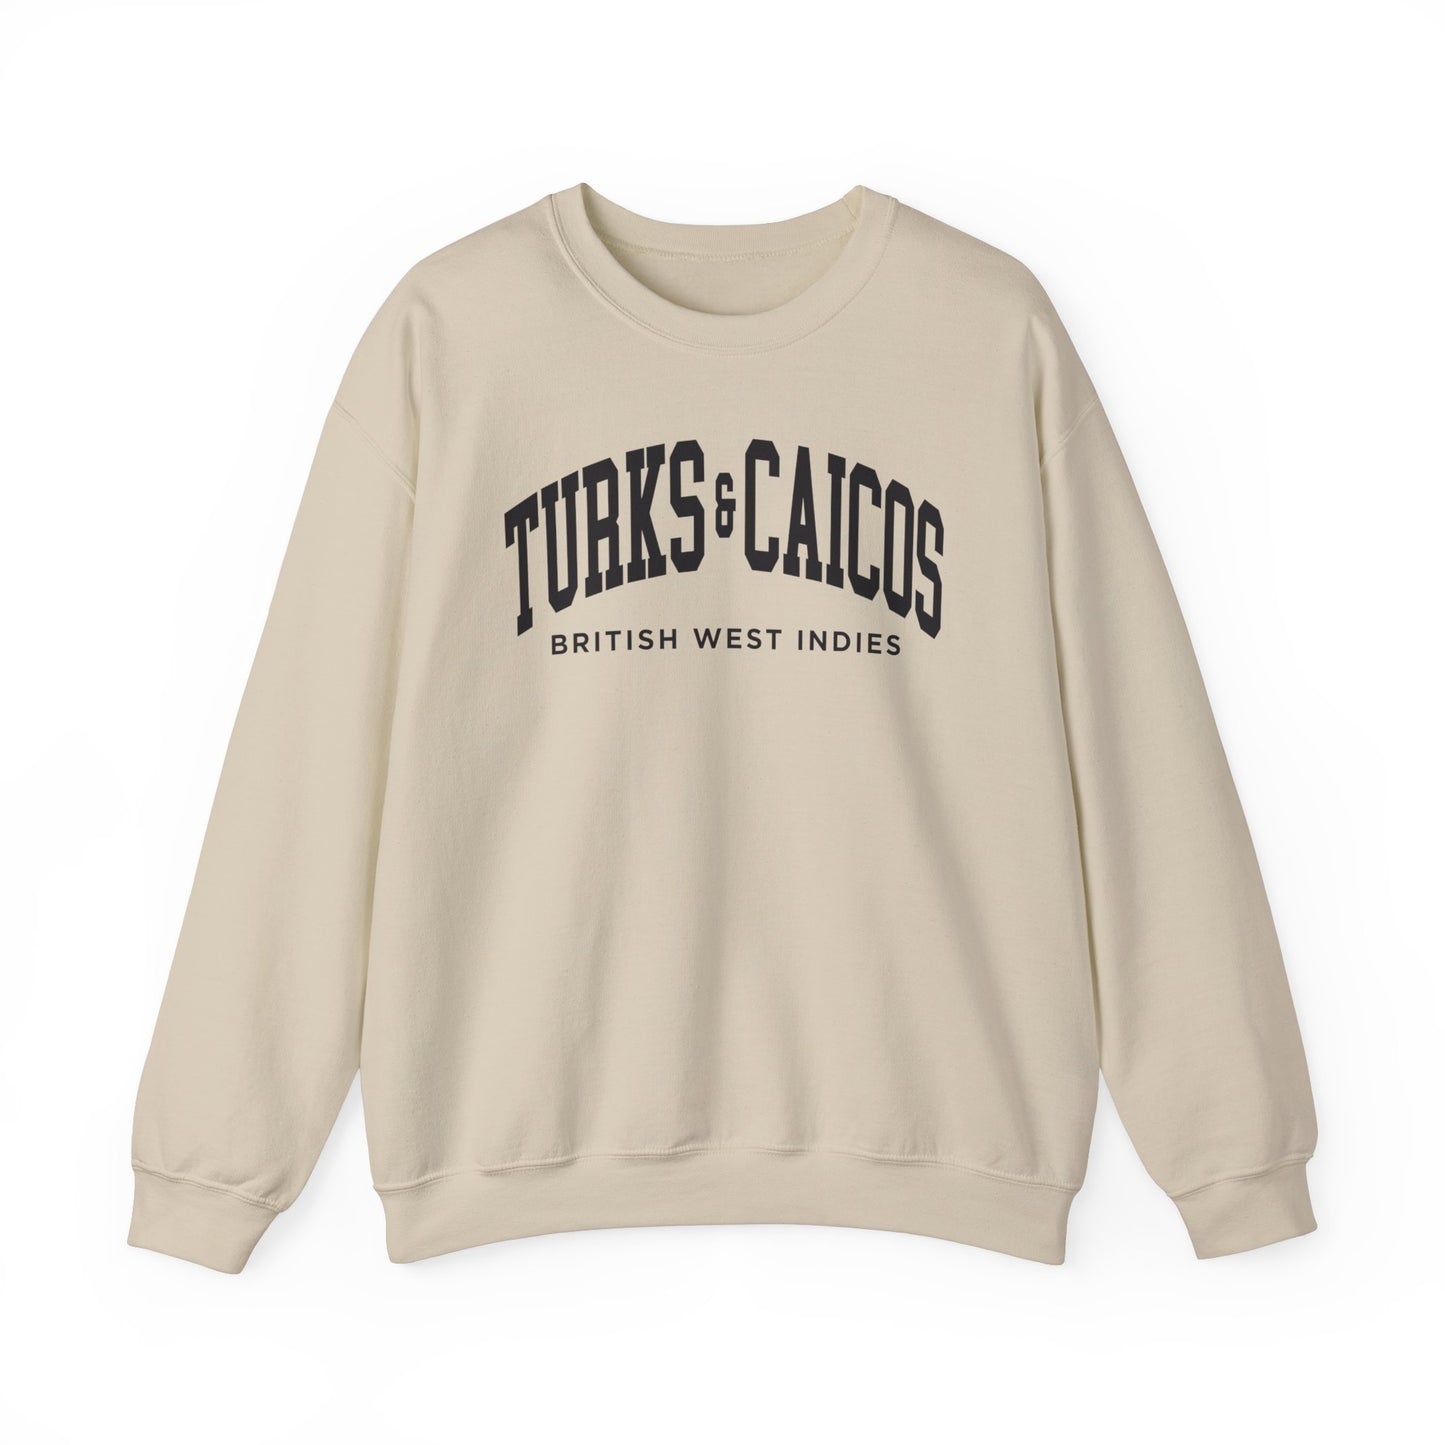 Turks & Caicos Sweatshirt